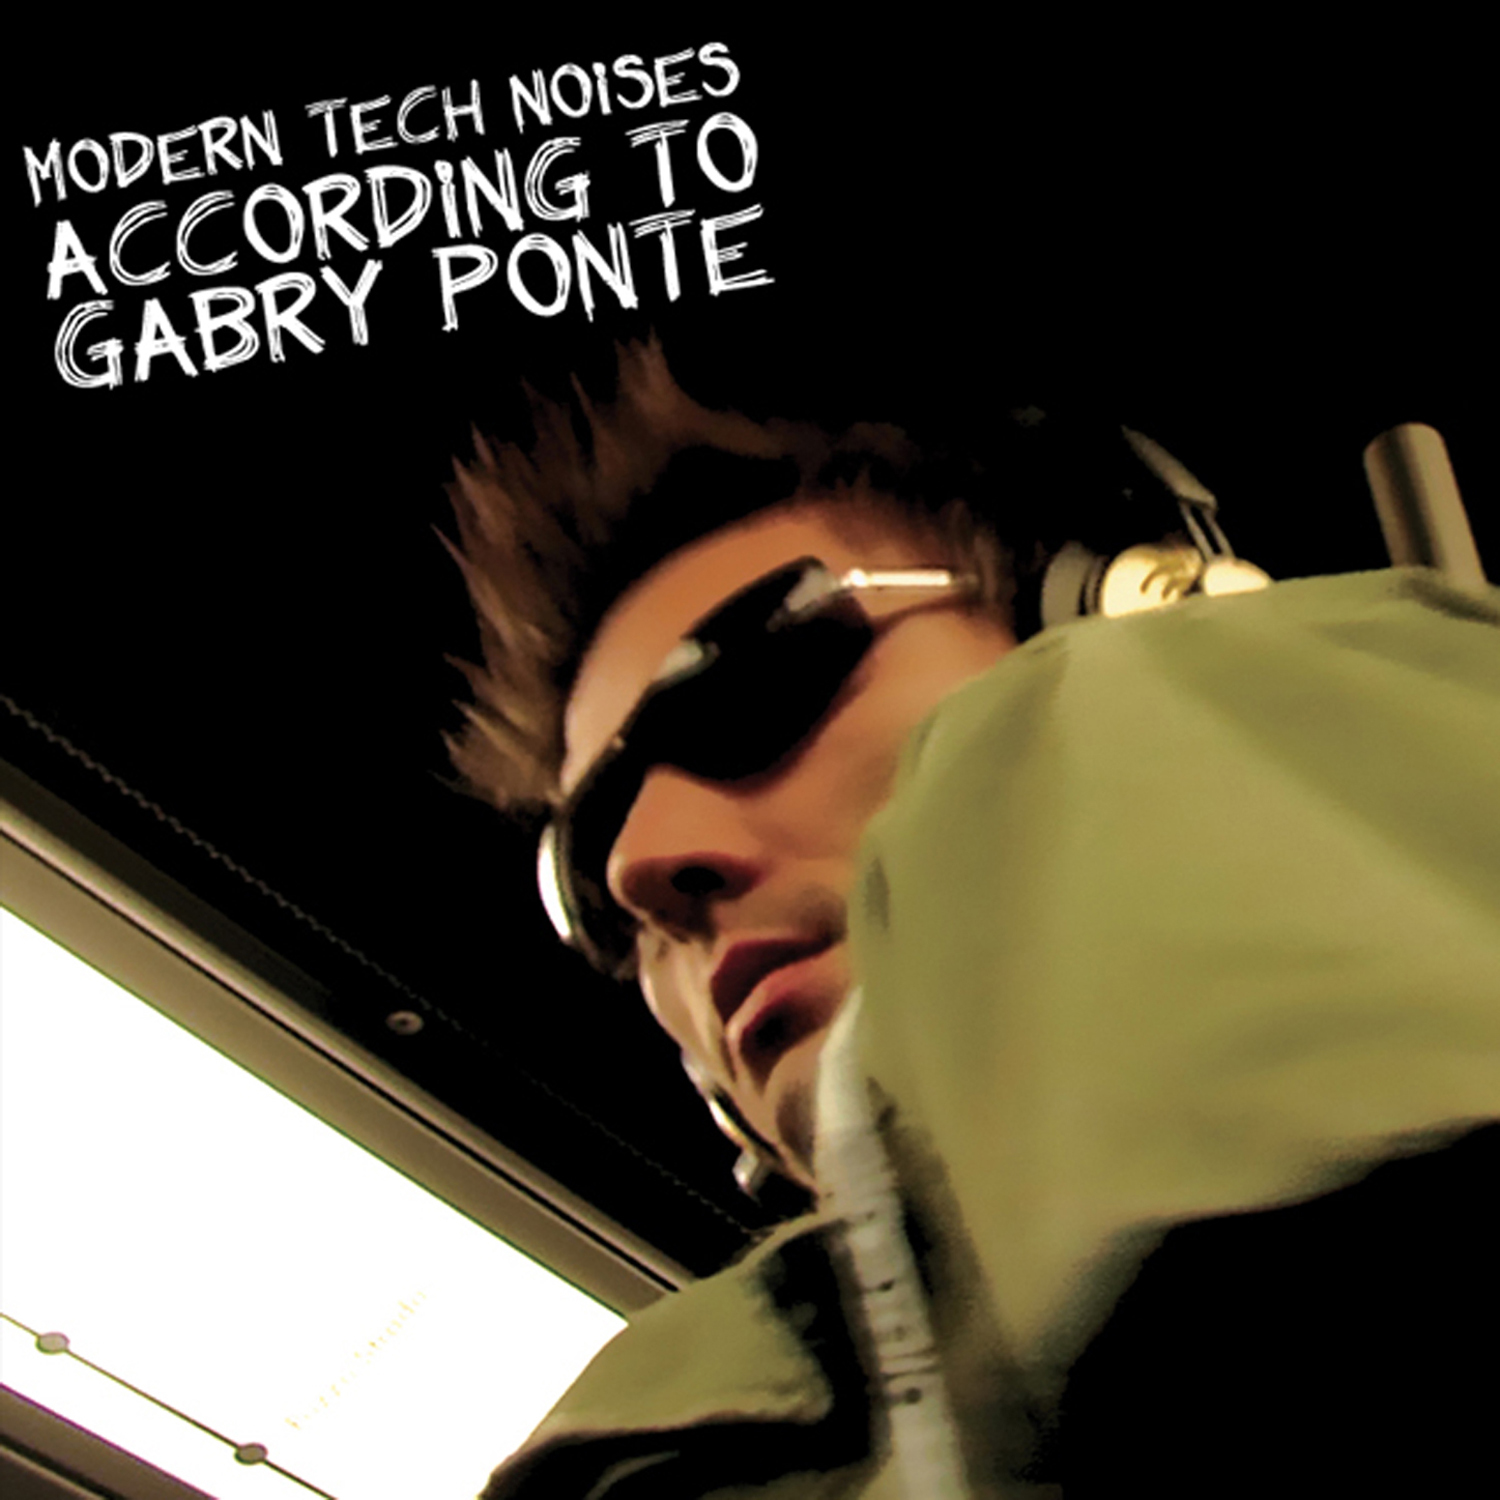 Modern Tech Noises According To Gabry Ponte